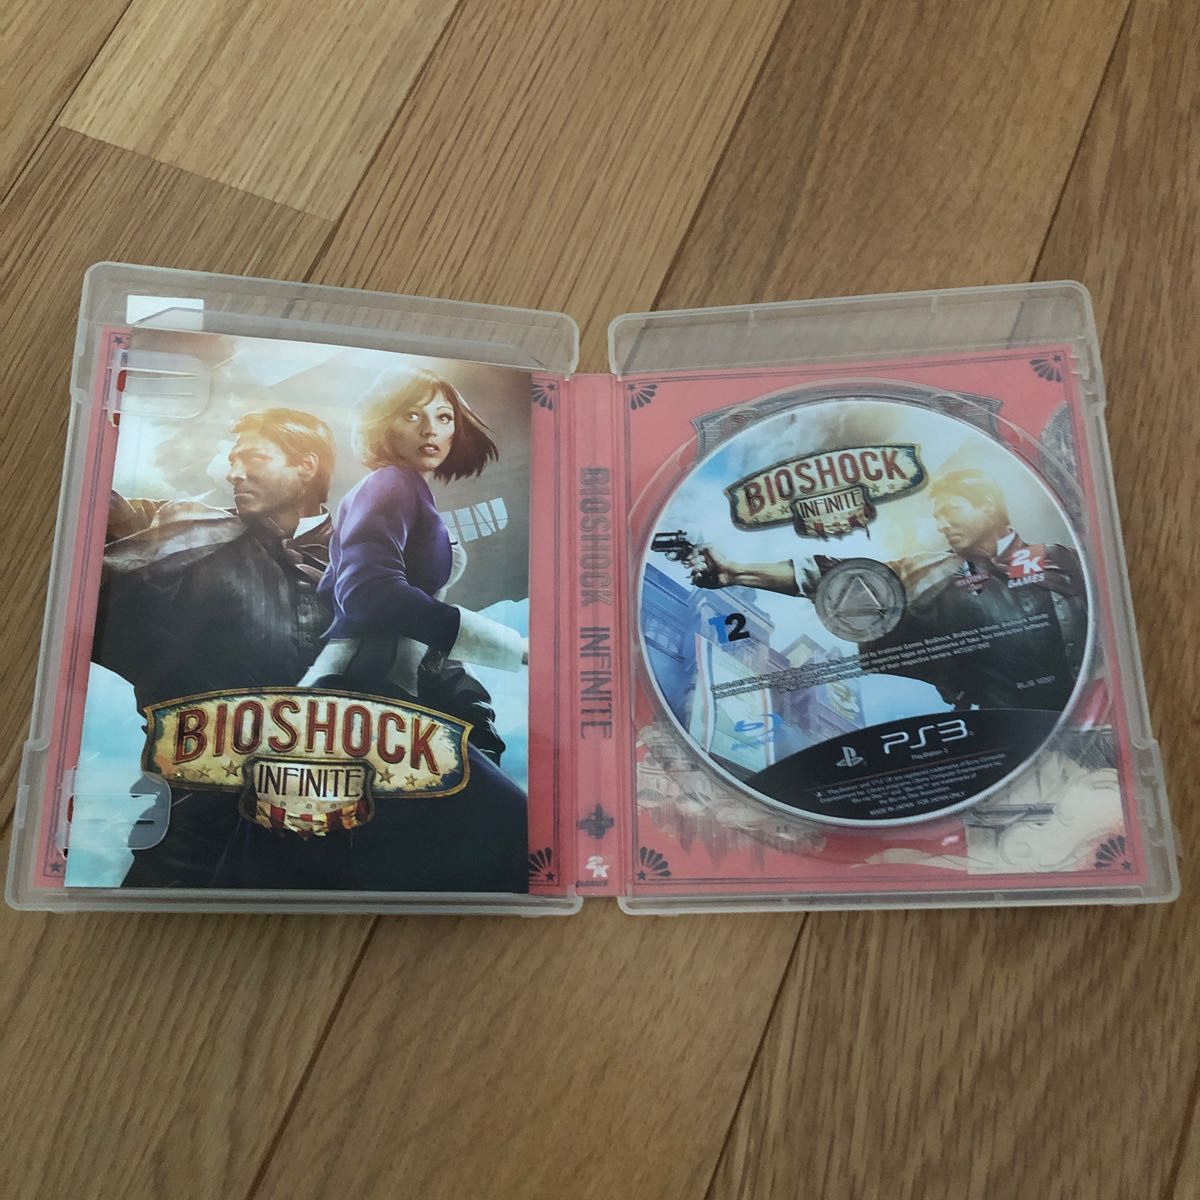 【PS3】 バイオショック インフィニット （Bioshock Infinite）